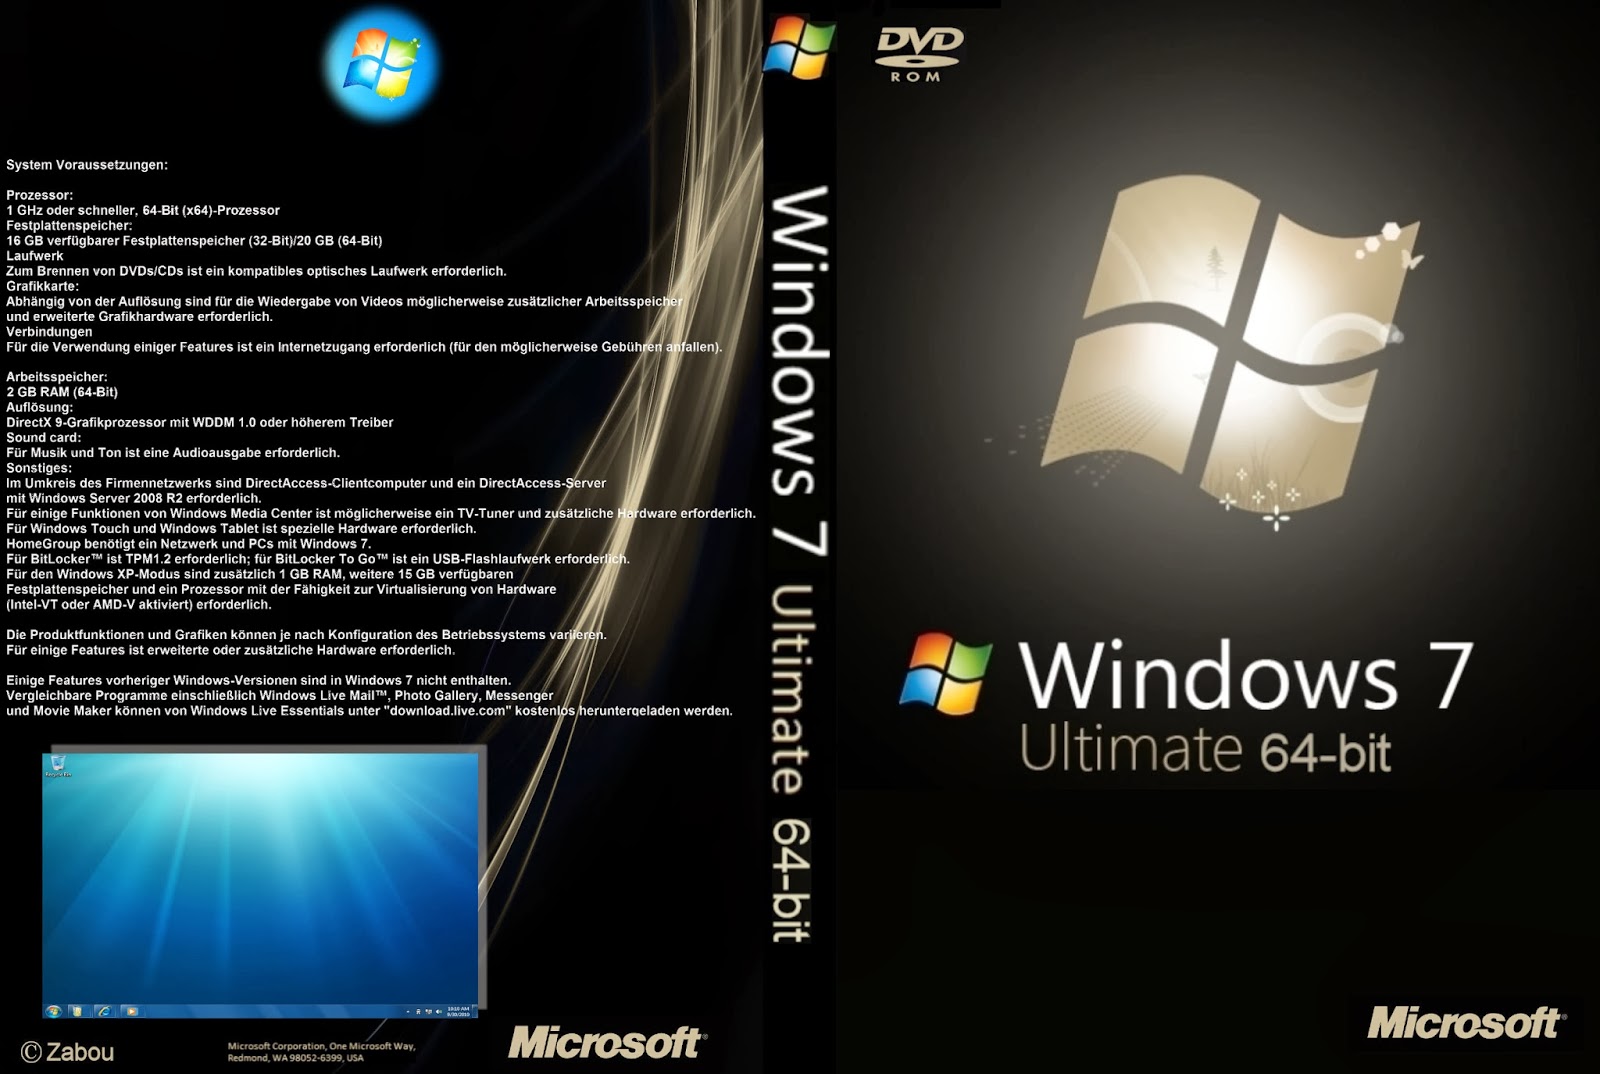 dvd shrink 64 bit windows 7